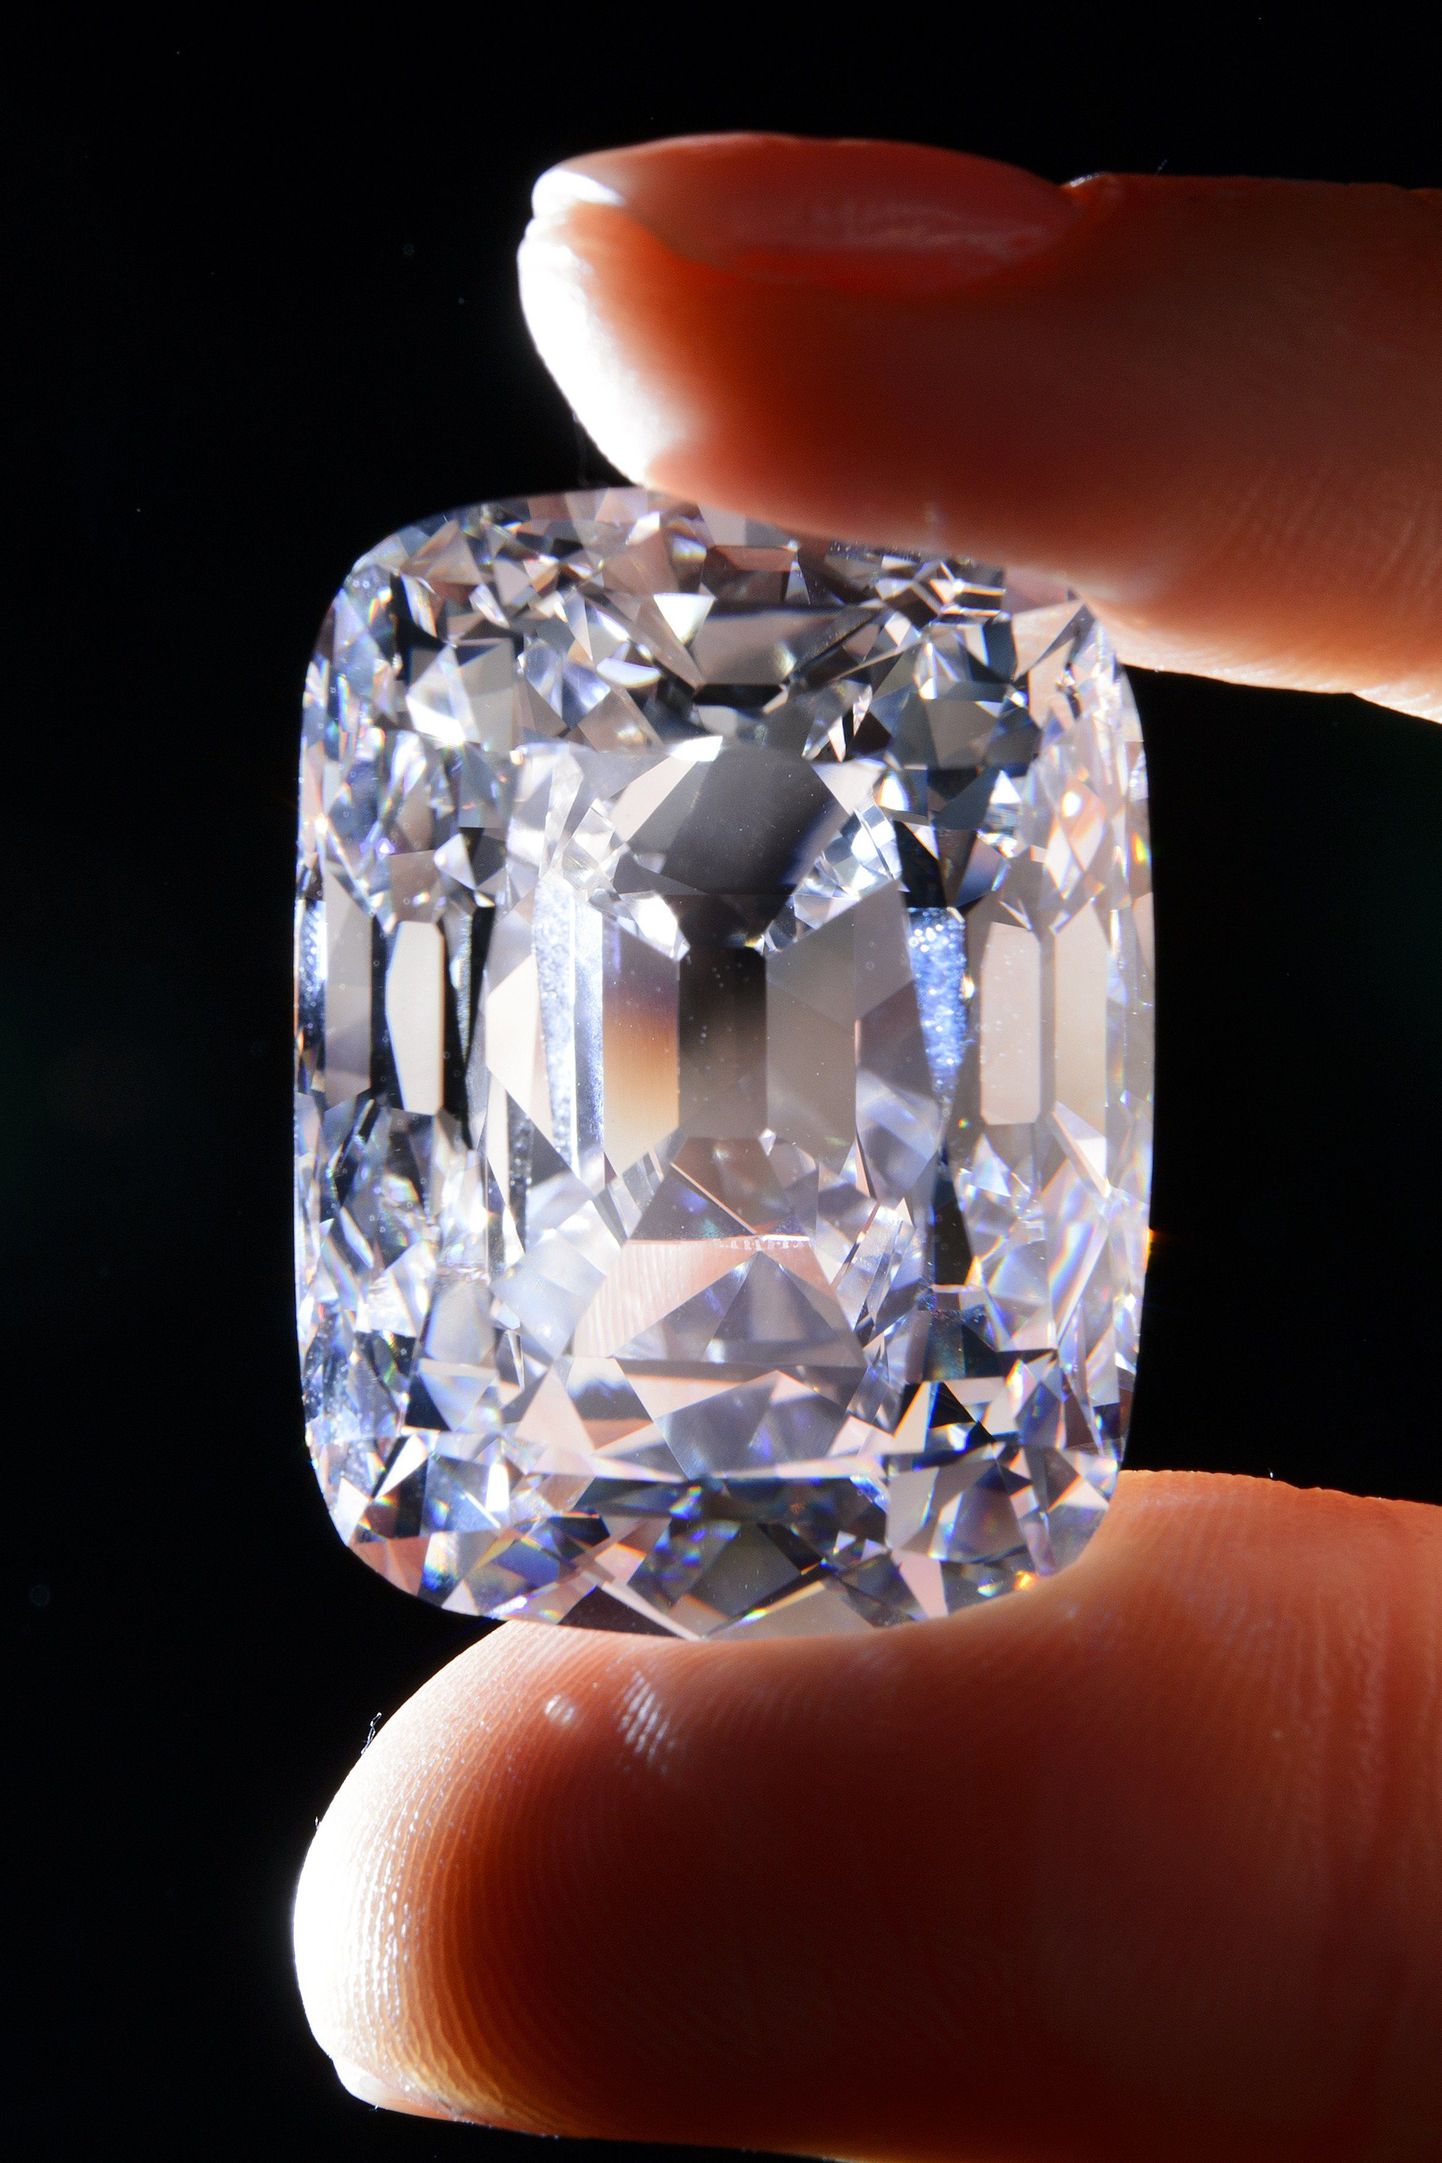 Austria ertshertsogi teemant müüdi 21 miljoni dollari eest